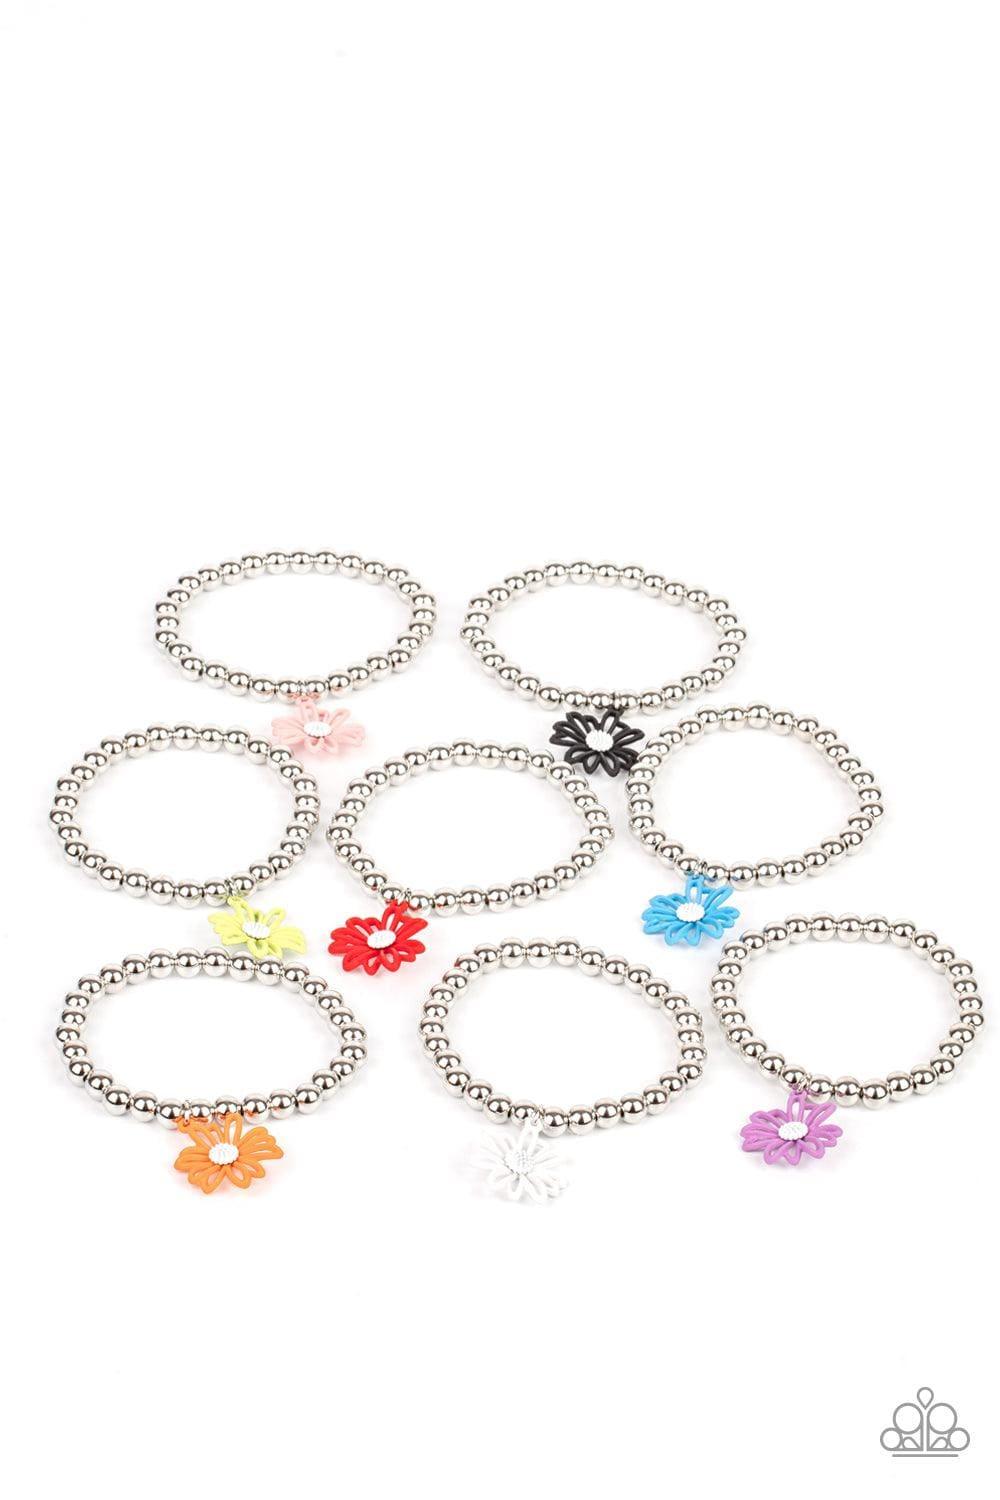 Paparazzi Accessories - Paparazzi Starlet Shimmer Jewelry - Flower Bracelets - Bling by JessieK